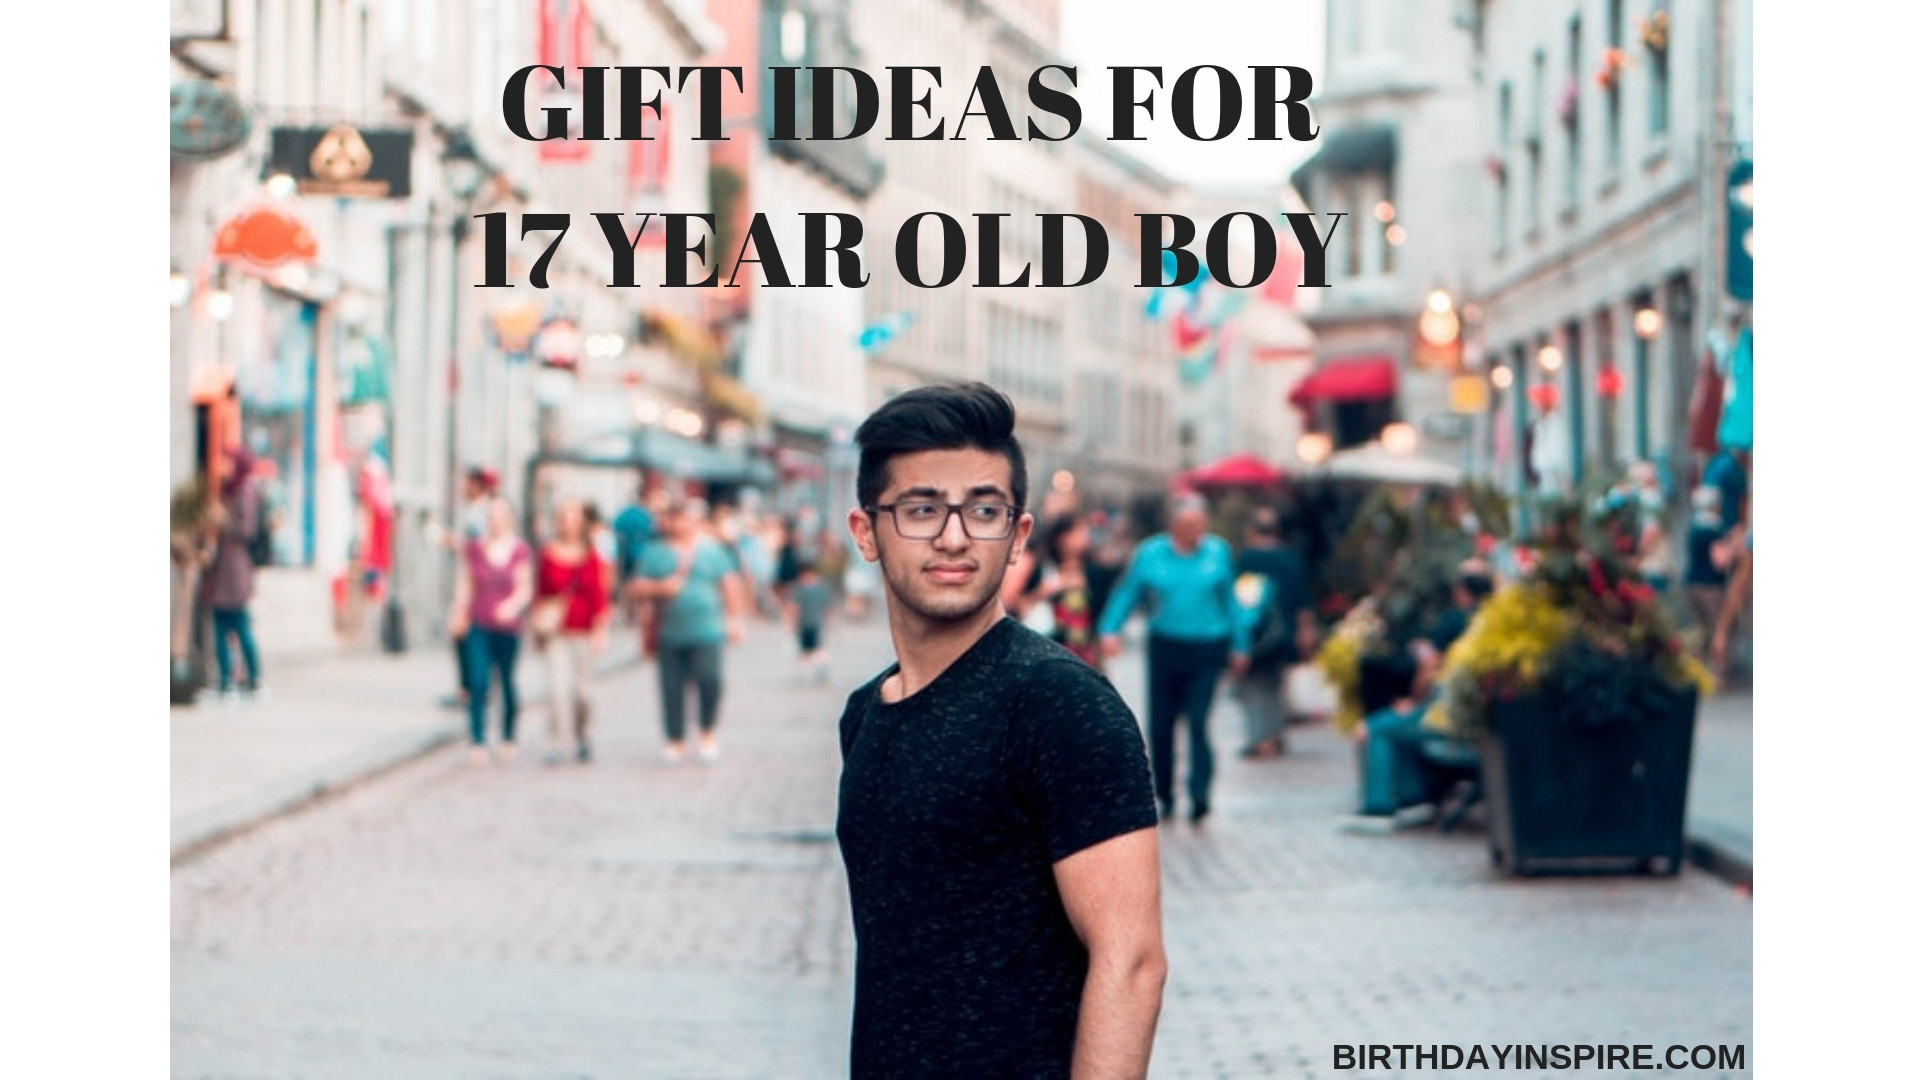 17 Year Old Birthday Gift Ideas
 33 Wonderful Gift Ideas For 17 Year Old Boy